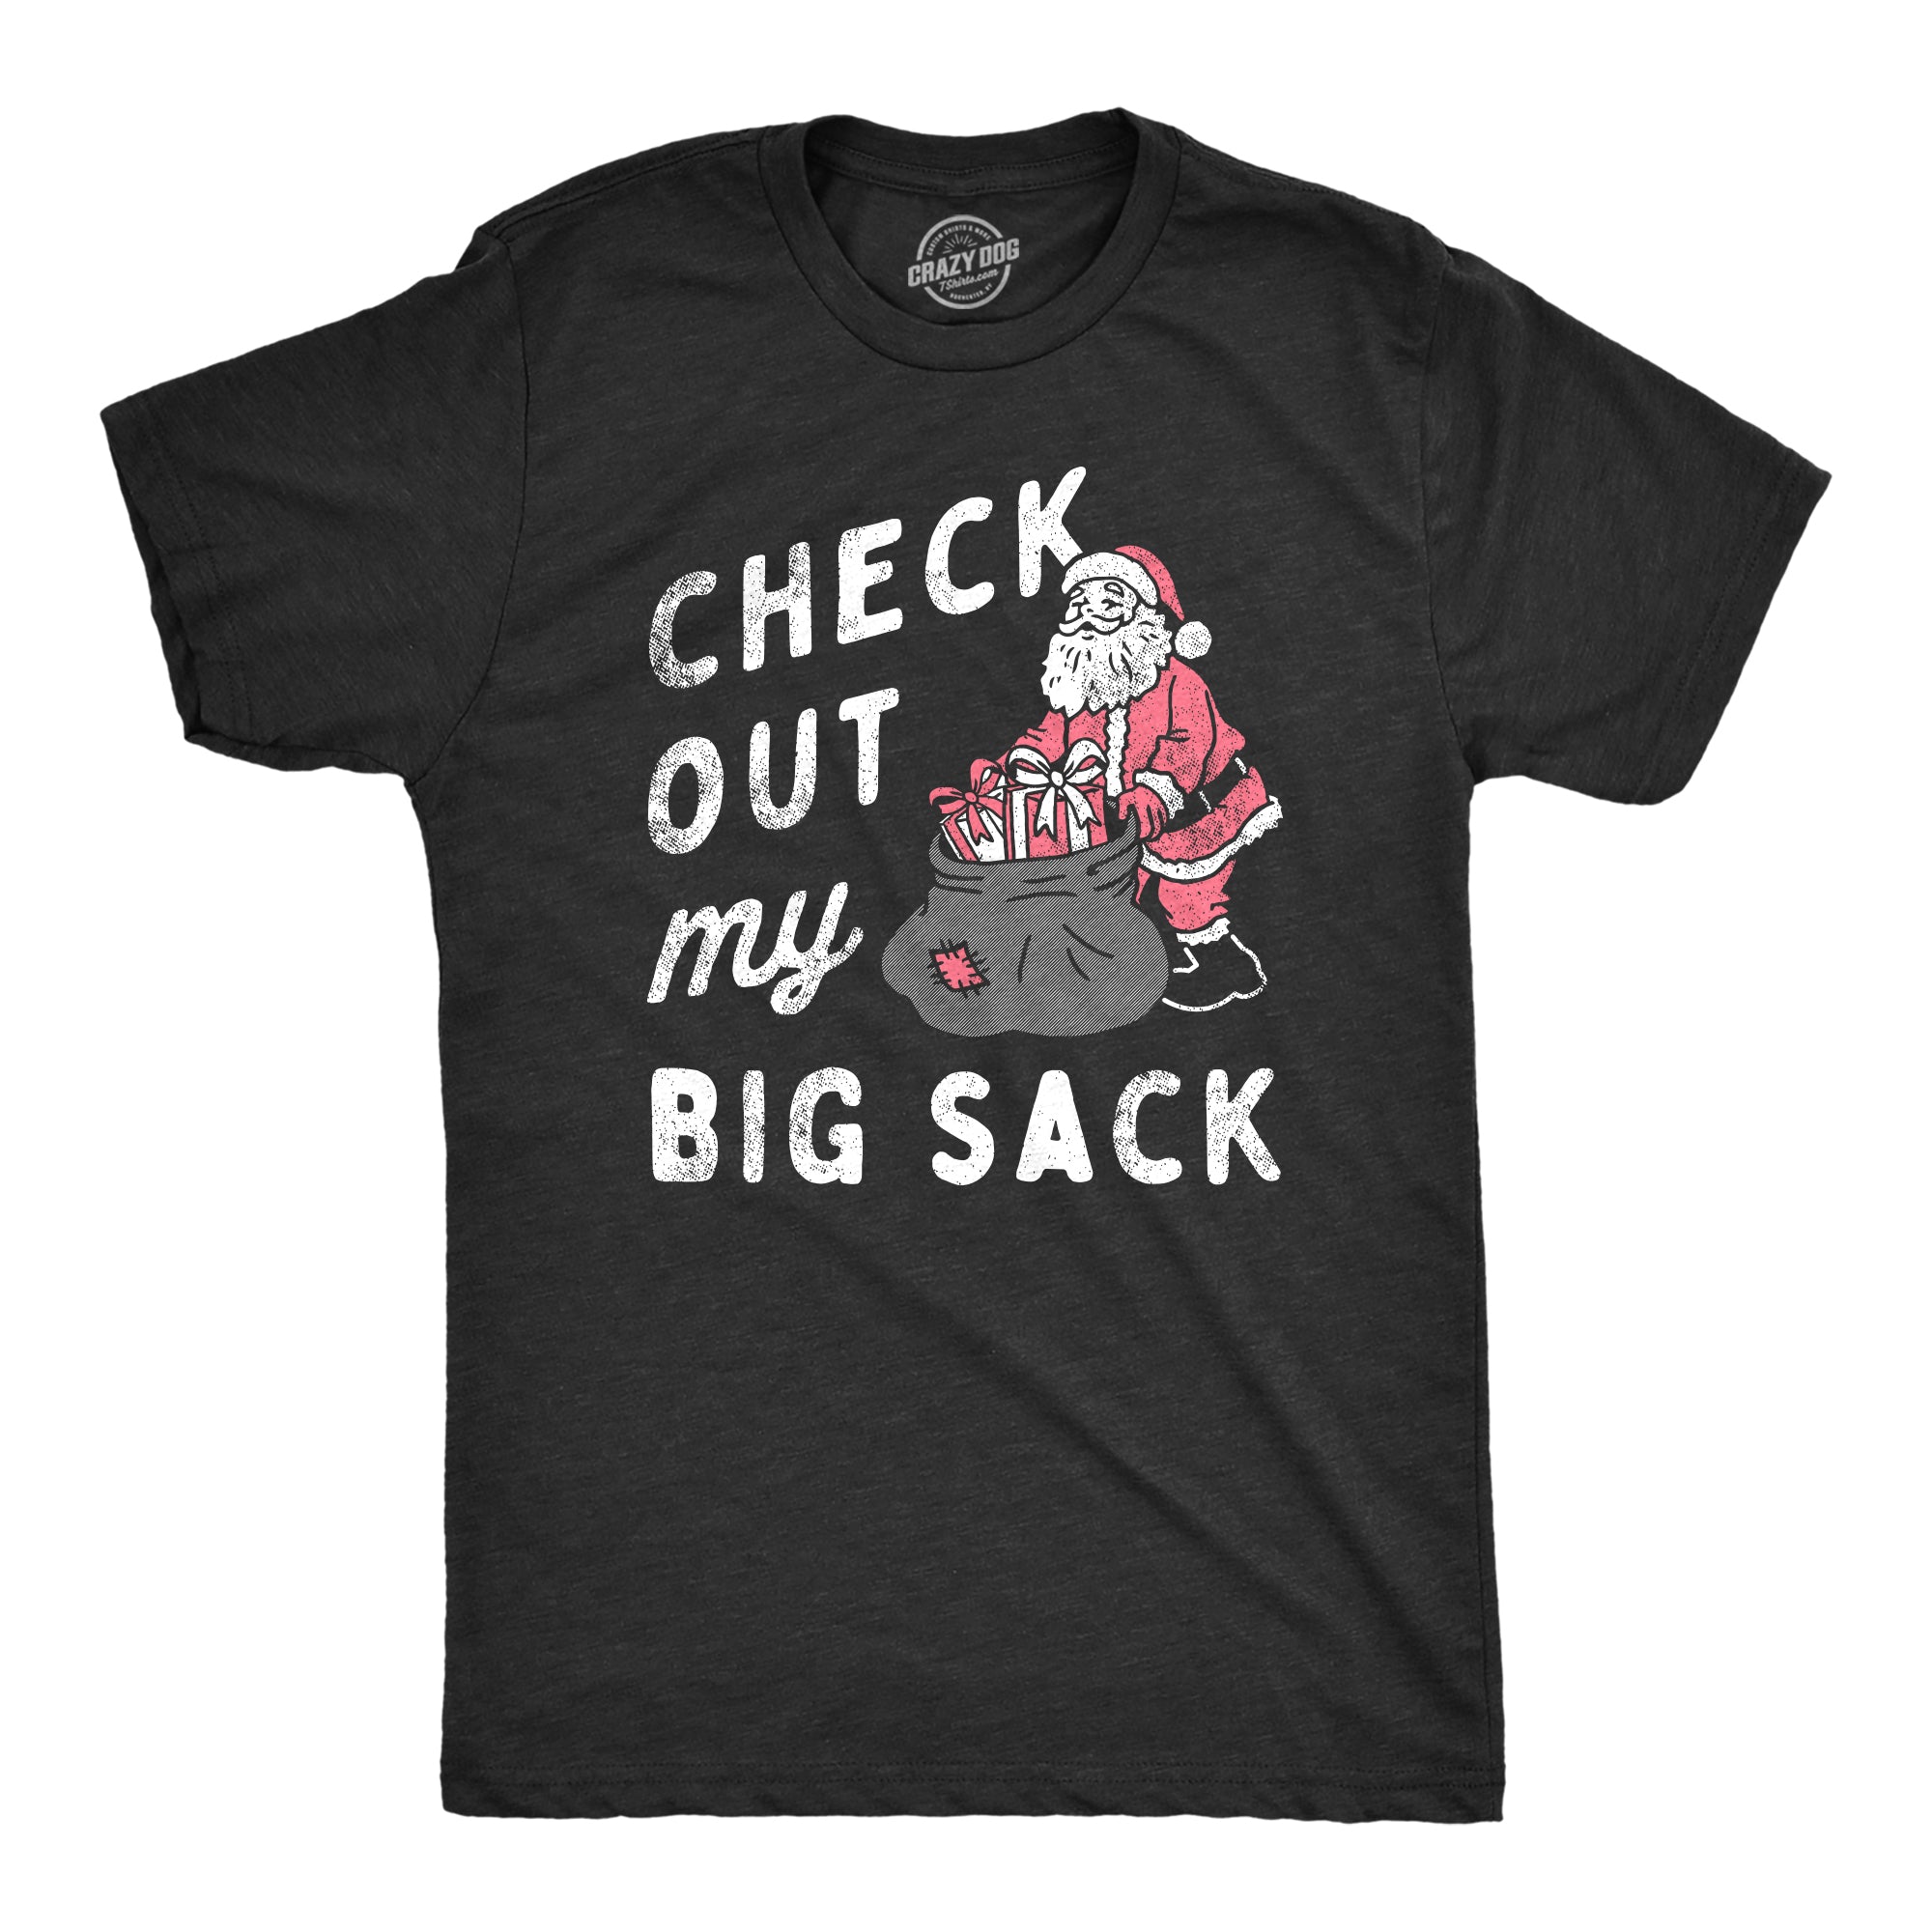 Funny Heather Black - Big Sack Check Out My Big Sack Mens T Shirt Nerdy Christmas Sarcastic Tee